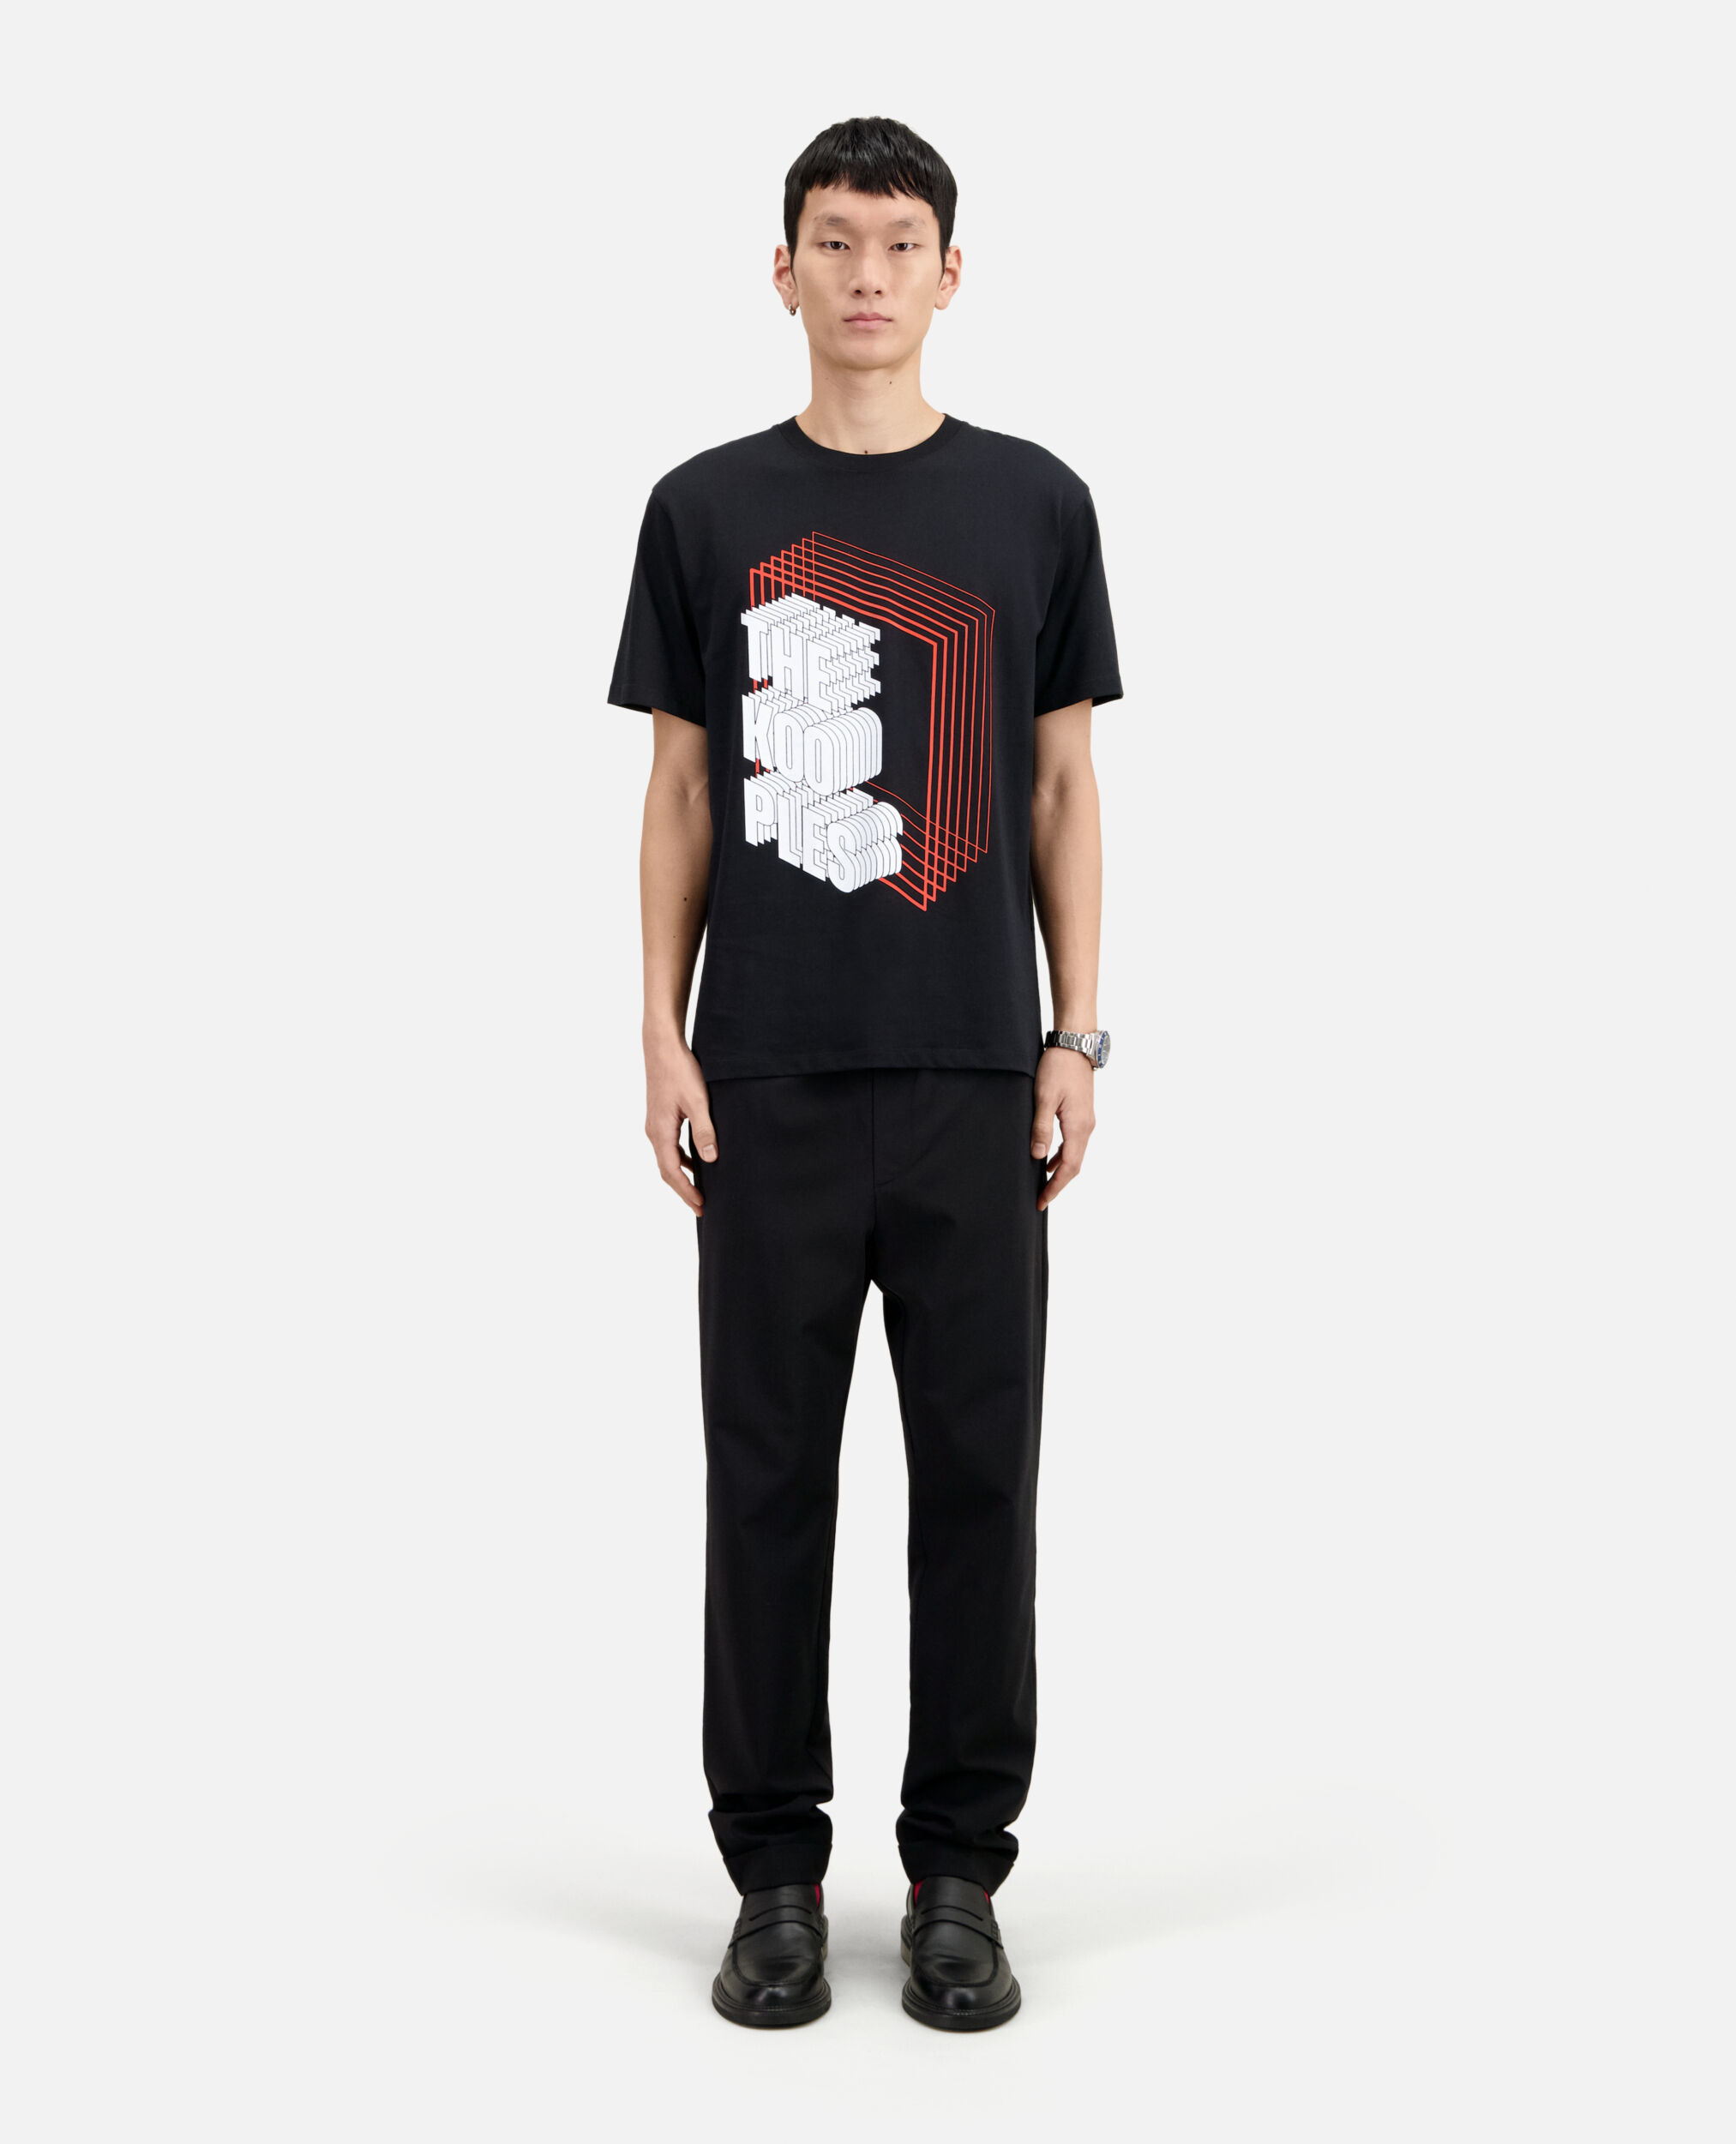 T-shirt Homme noir avec sérigraphie Neon logo, BLACK, hi-res image number null